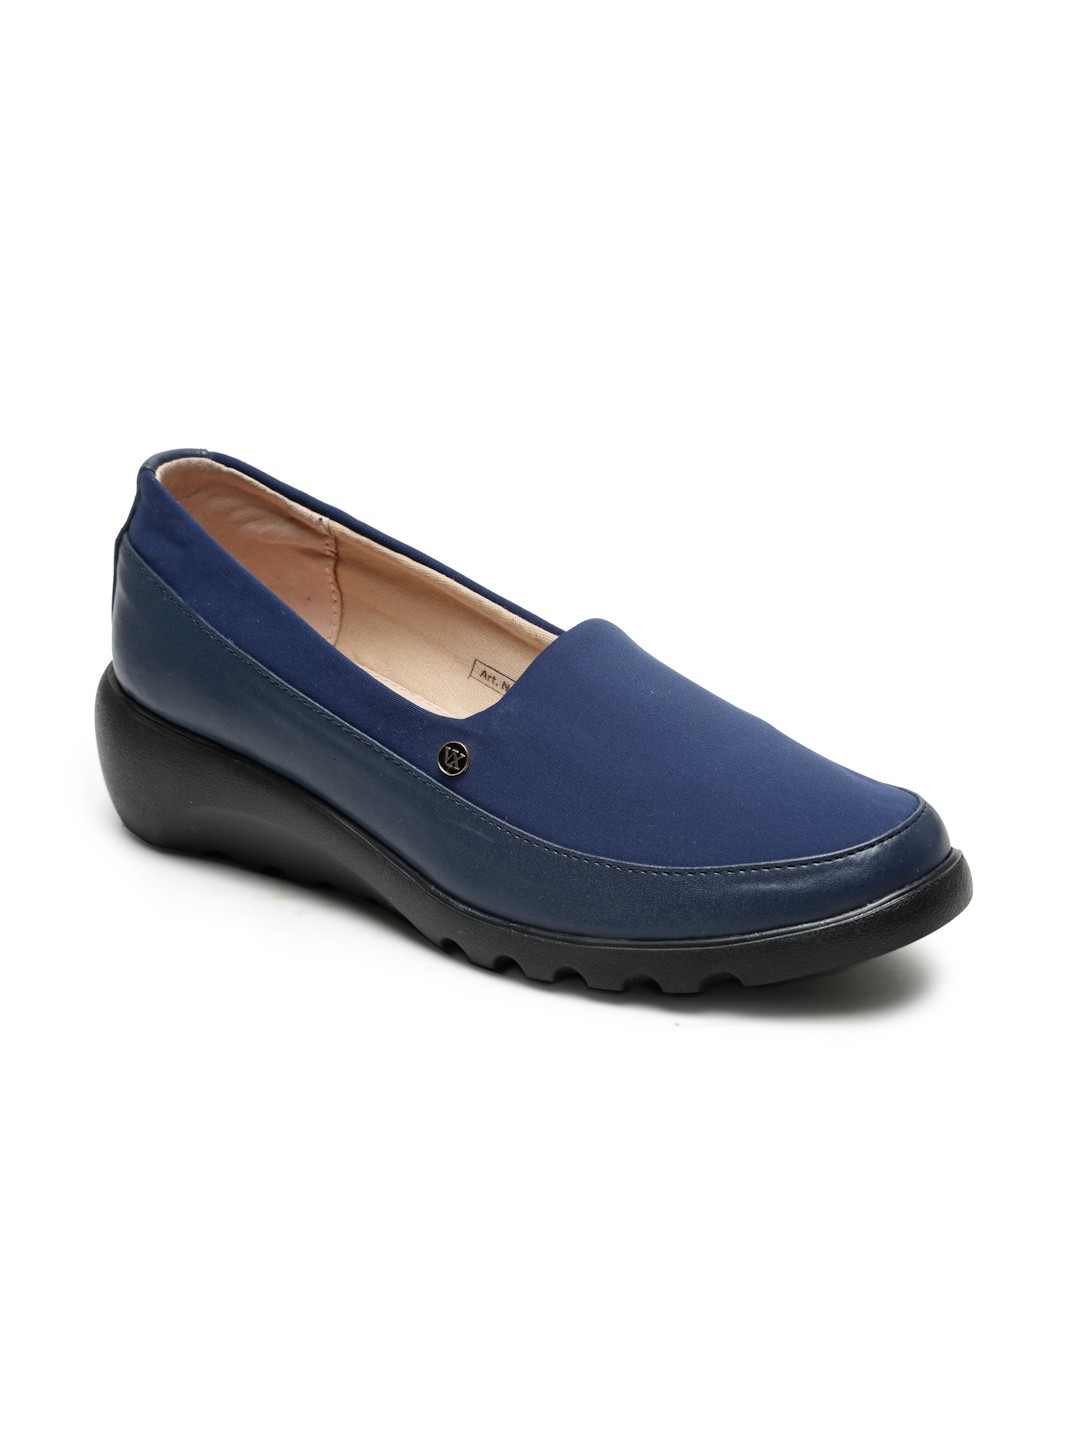 Buy Von Wellx Germany Comfort Women's Blue Casual Shoes Elsa Online in Ranchi